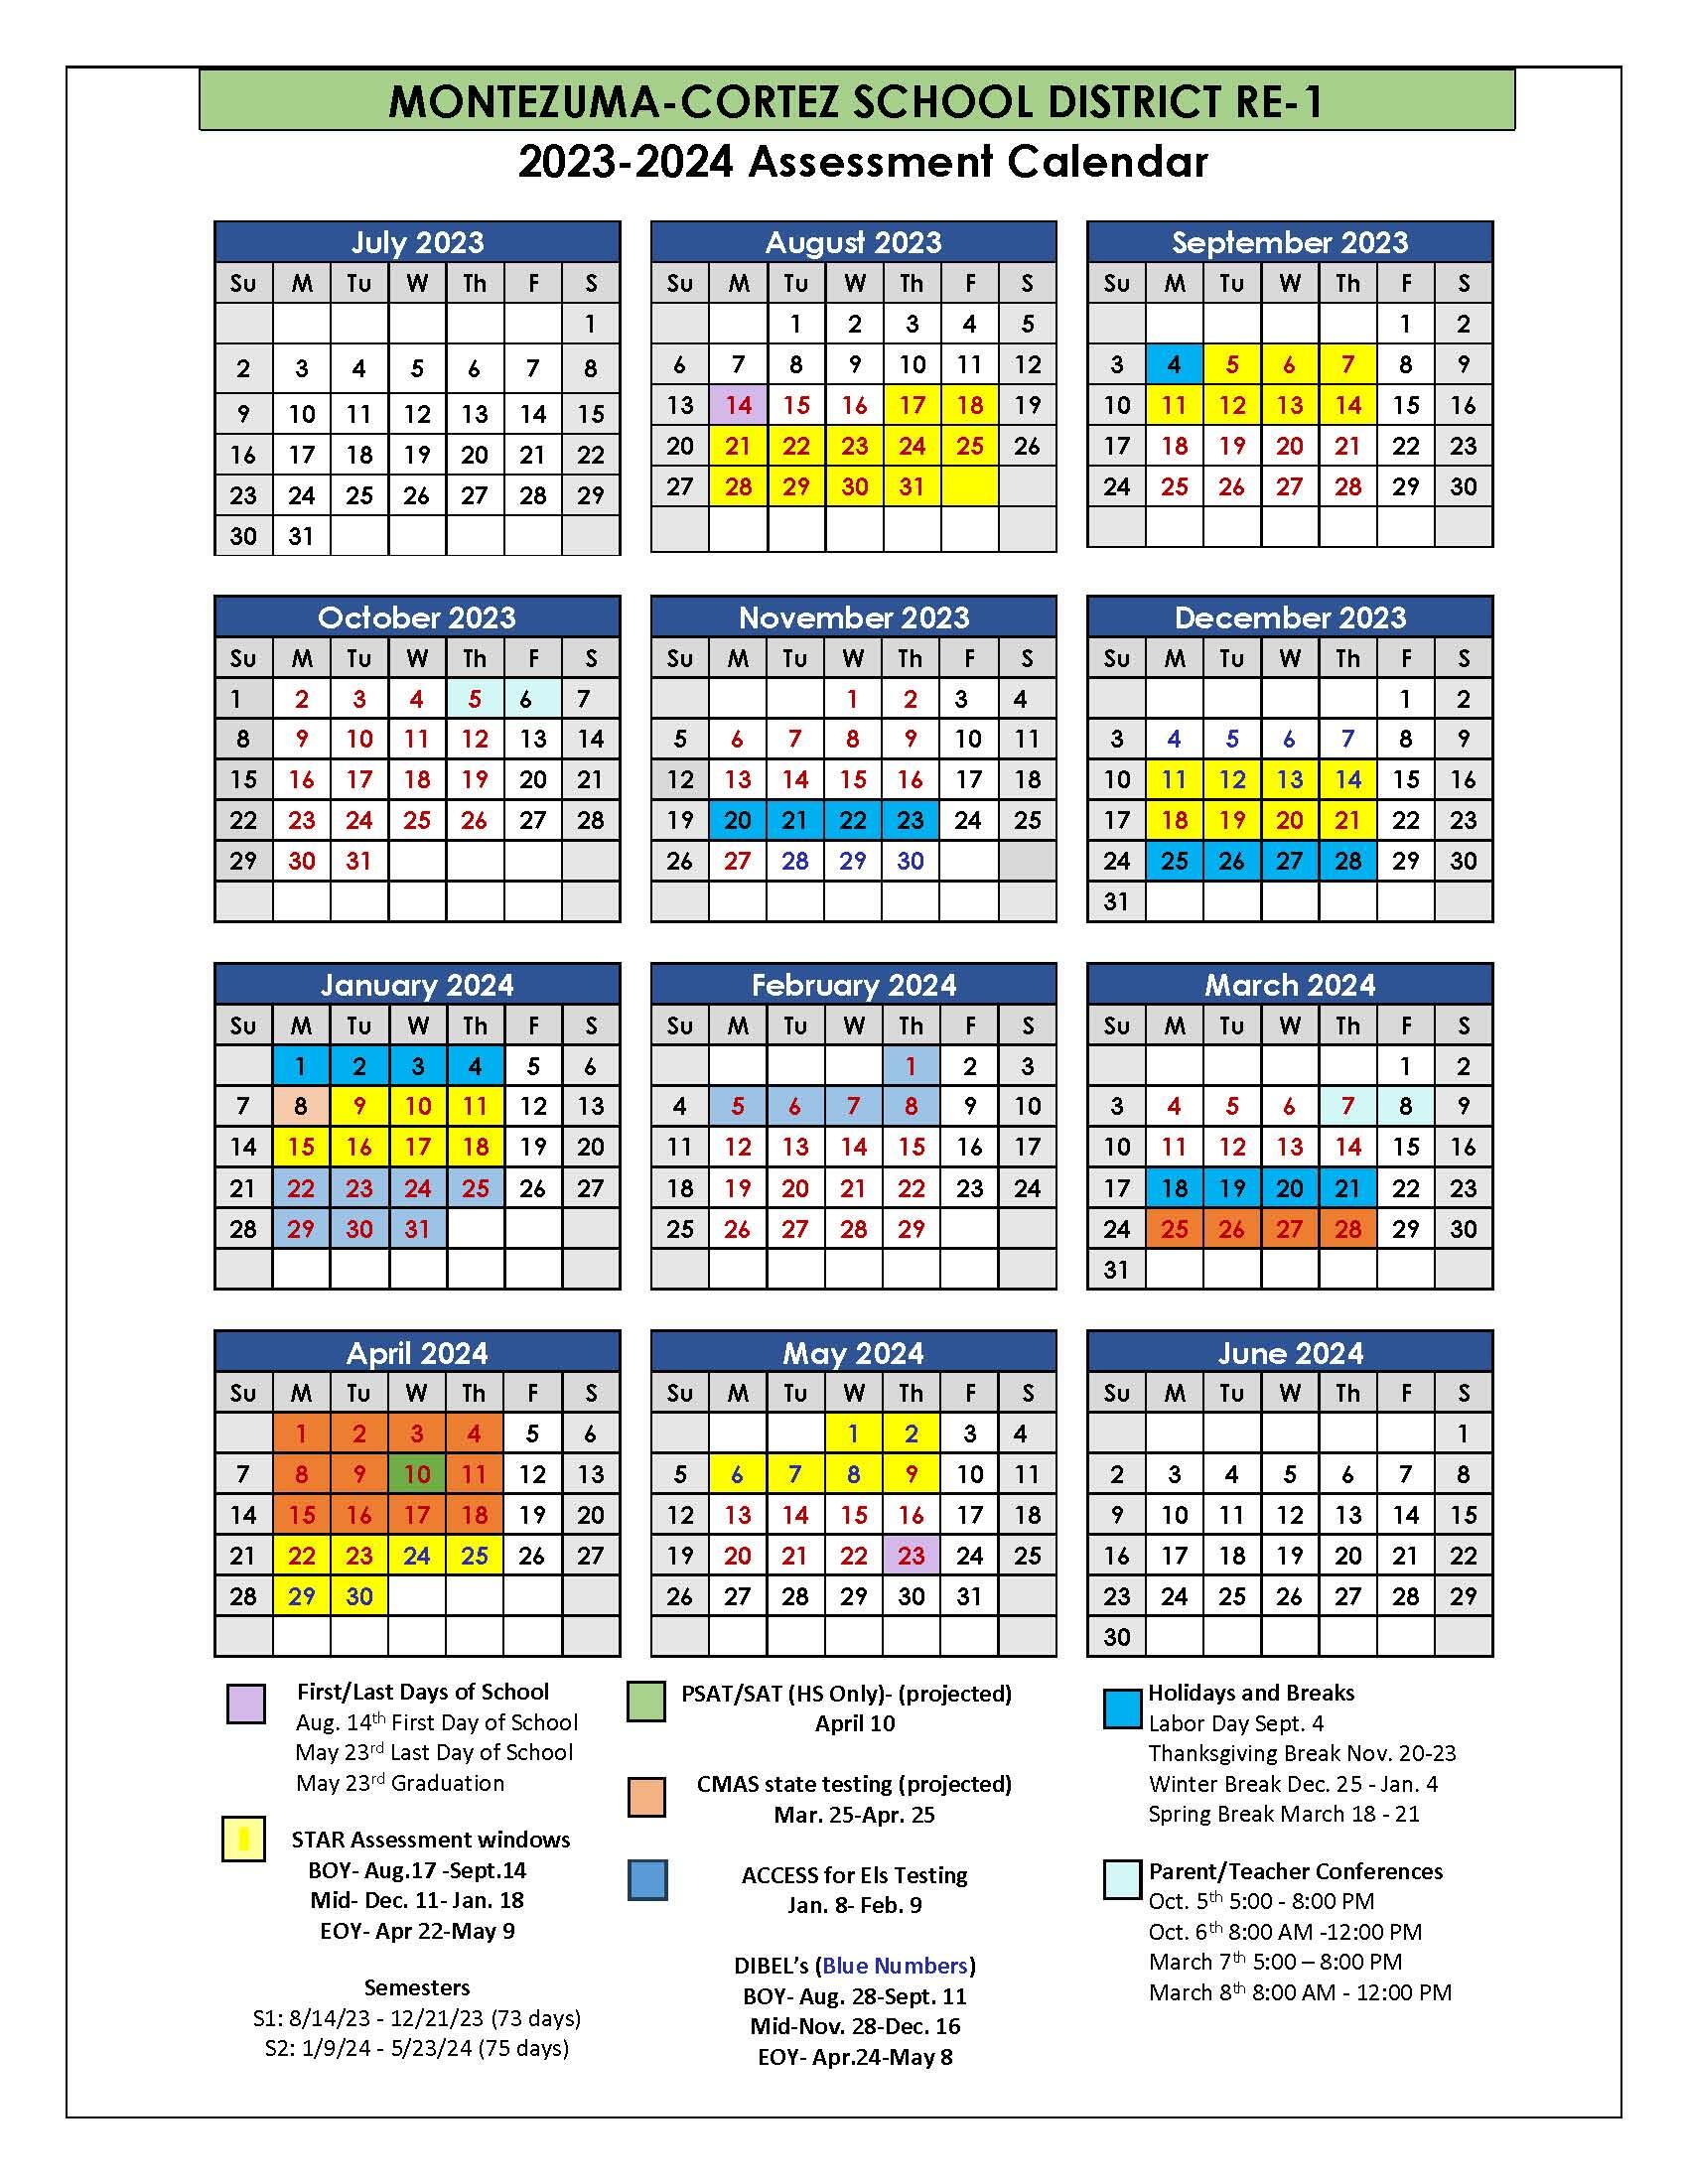 2020-21 Assessment Calendar image